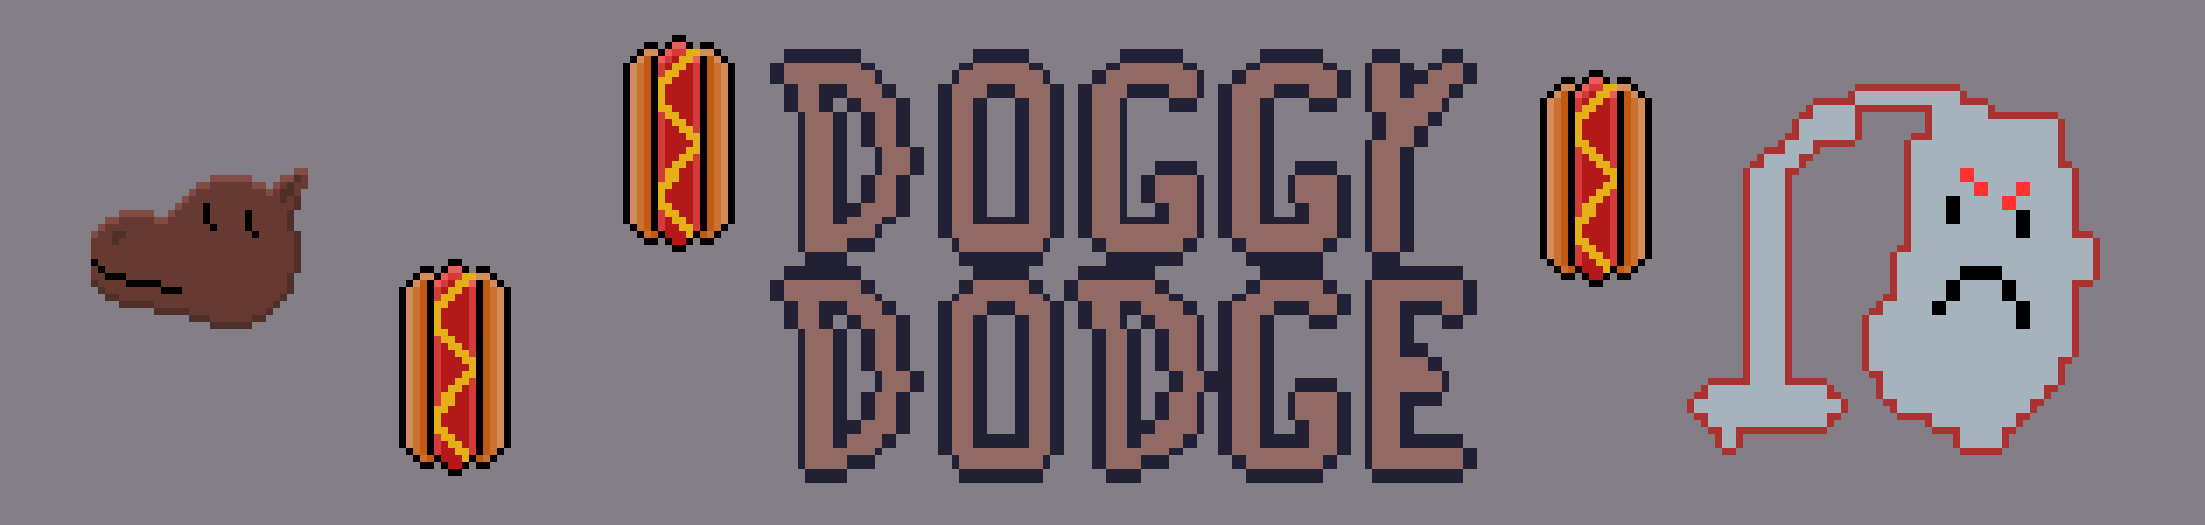 Doggy Dodge